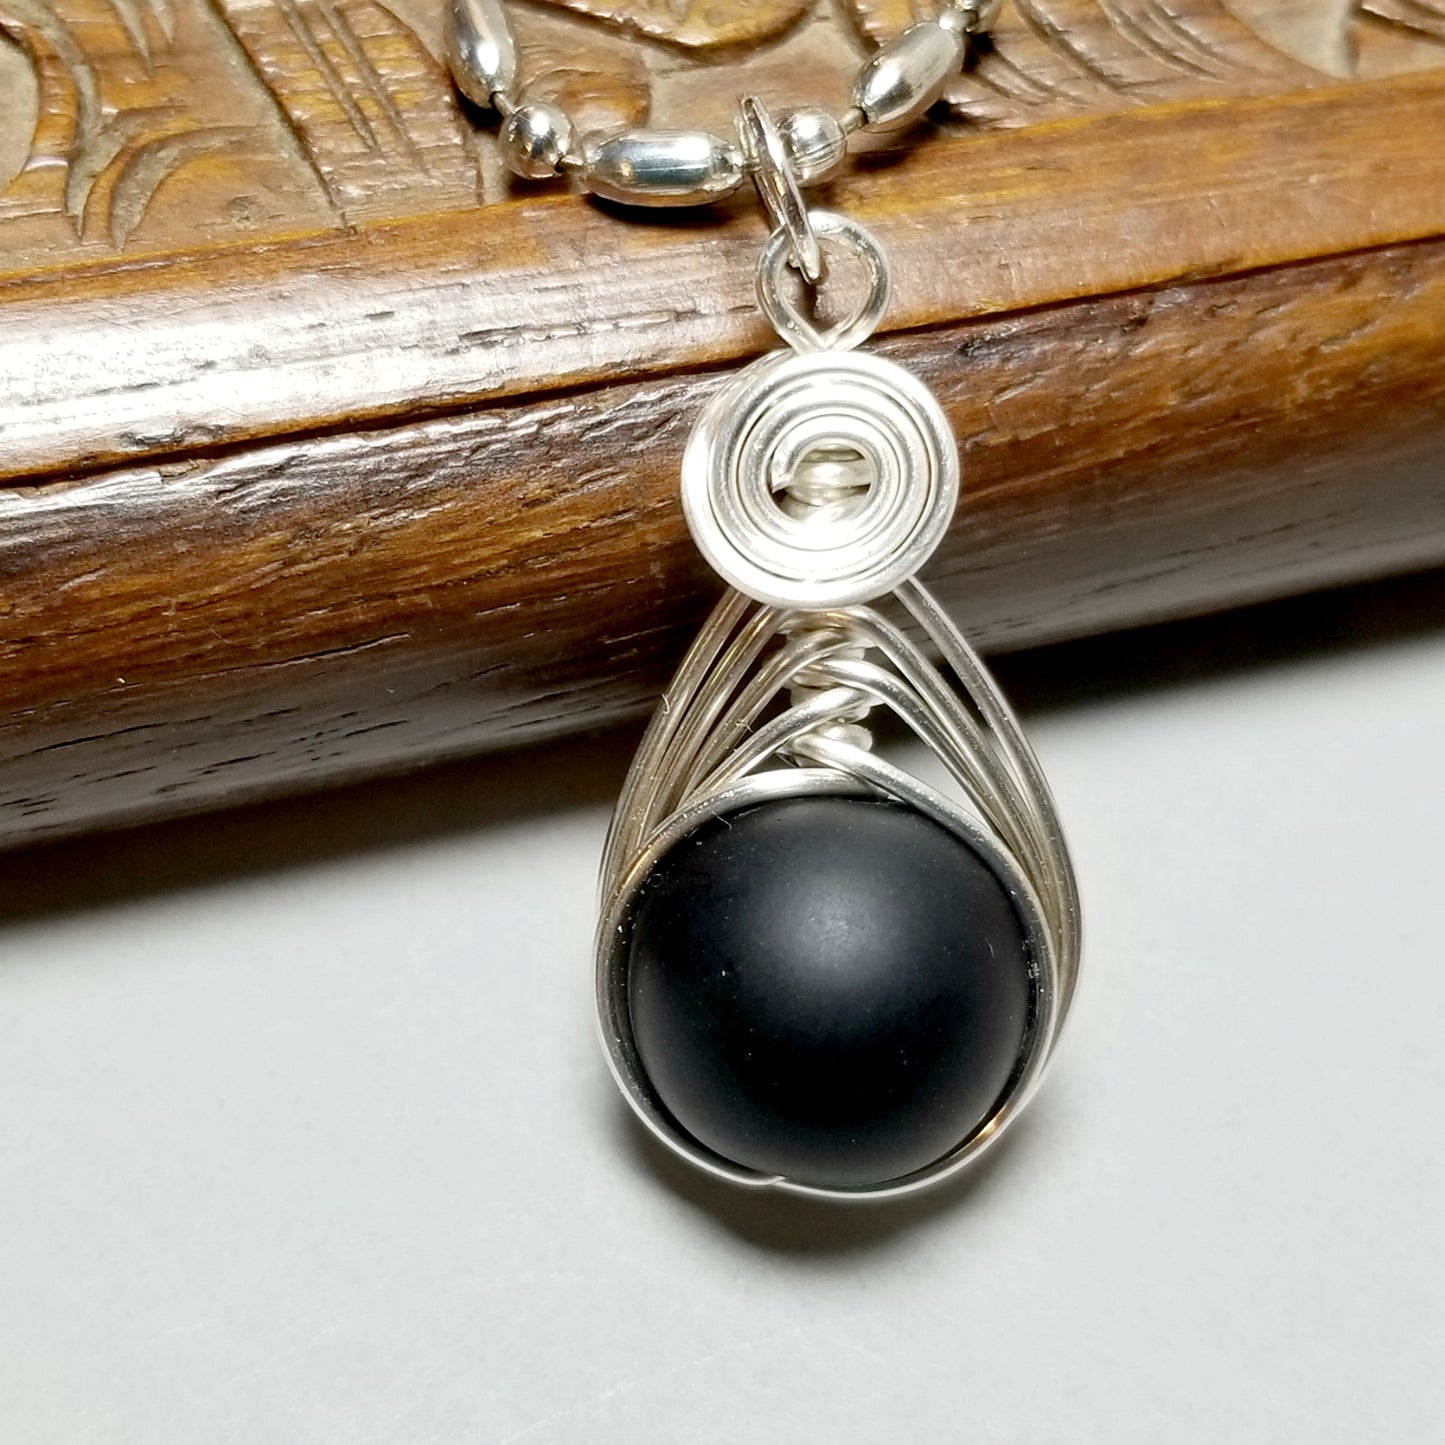 Silver Herringbone Jewelry, Matt Black Onyx Necklace